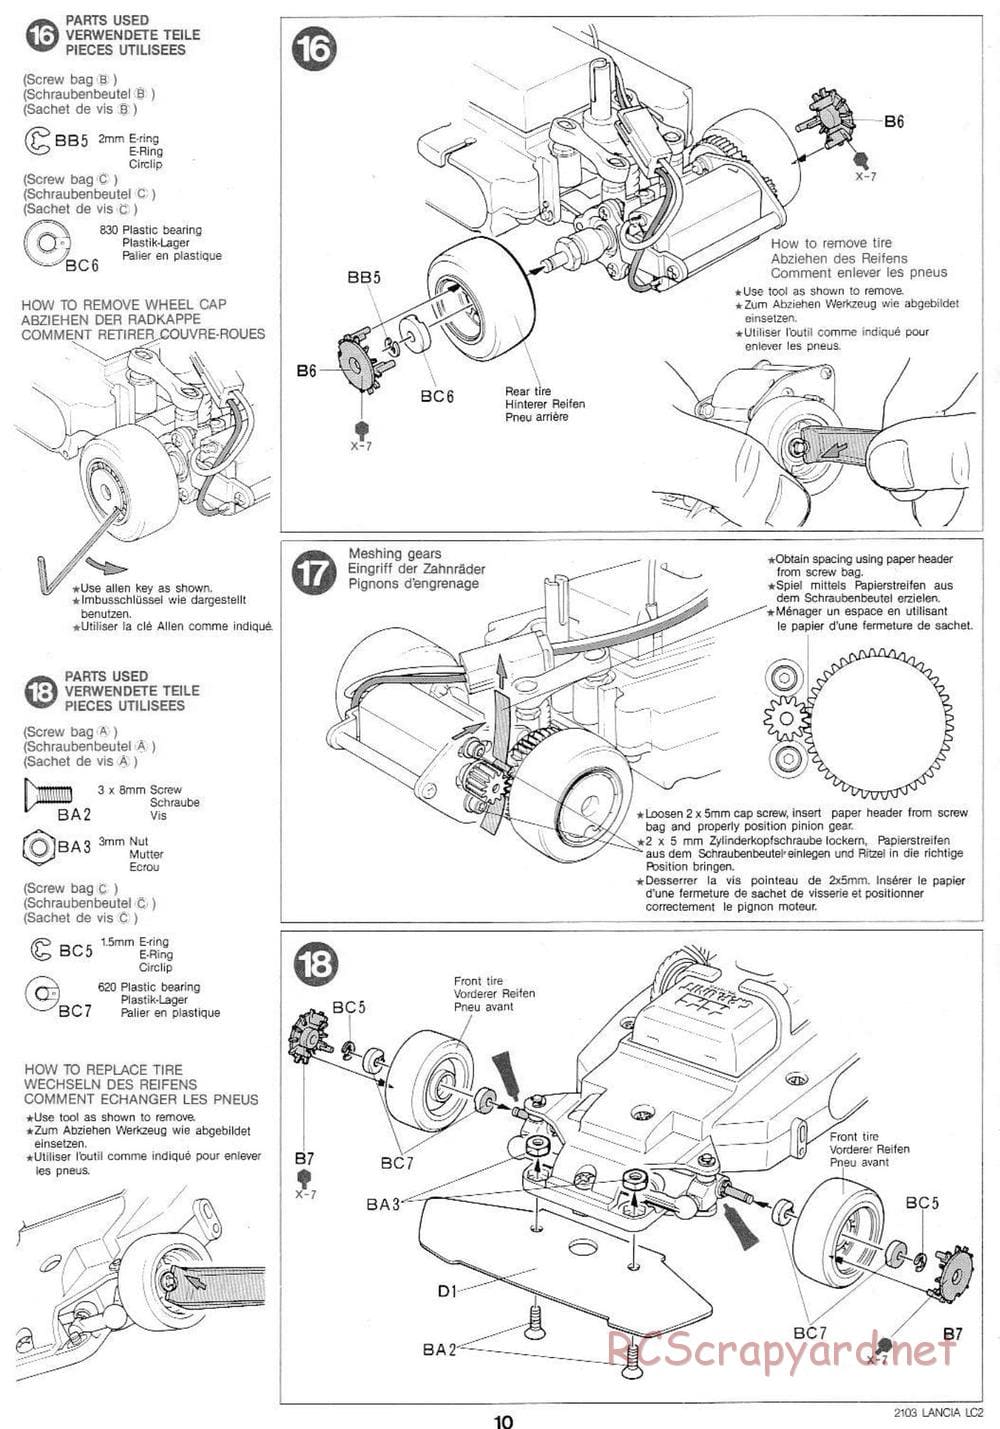 Tamiya - Tamtech - Lancia LC2 Chassis - Manual - Page 10